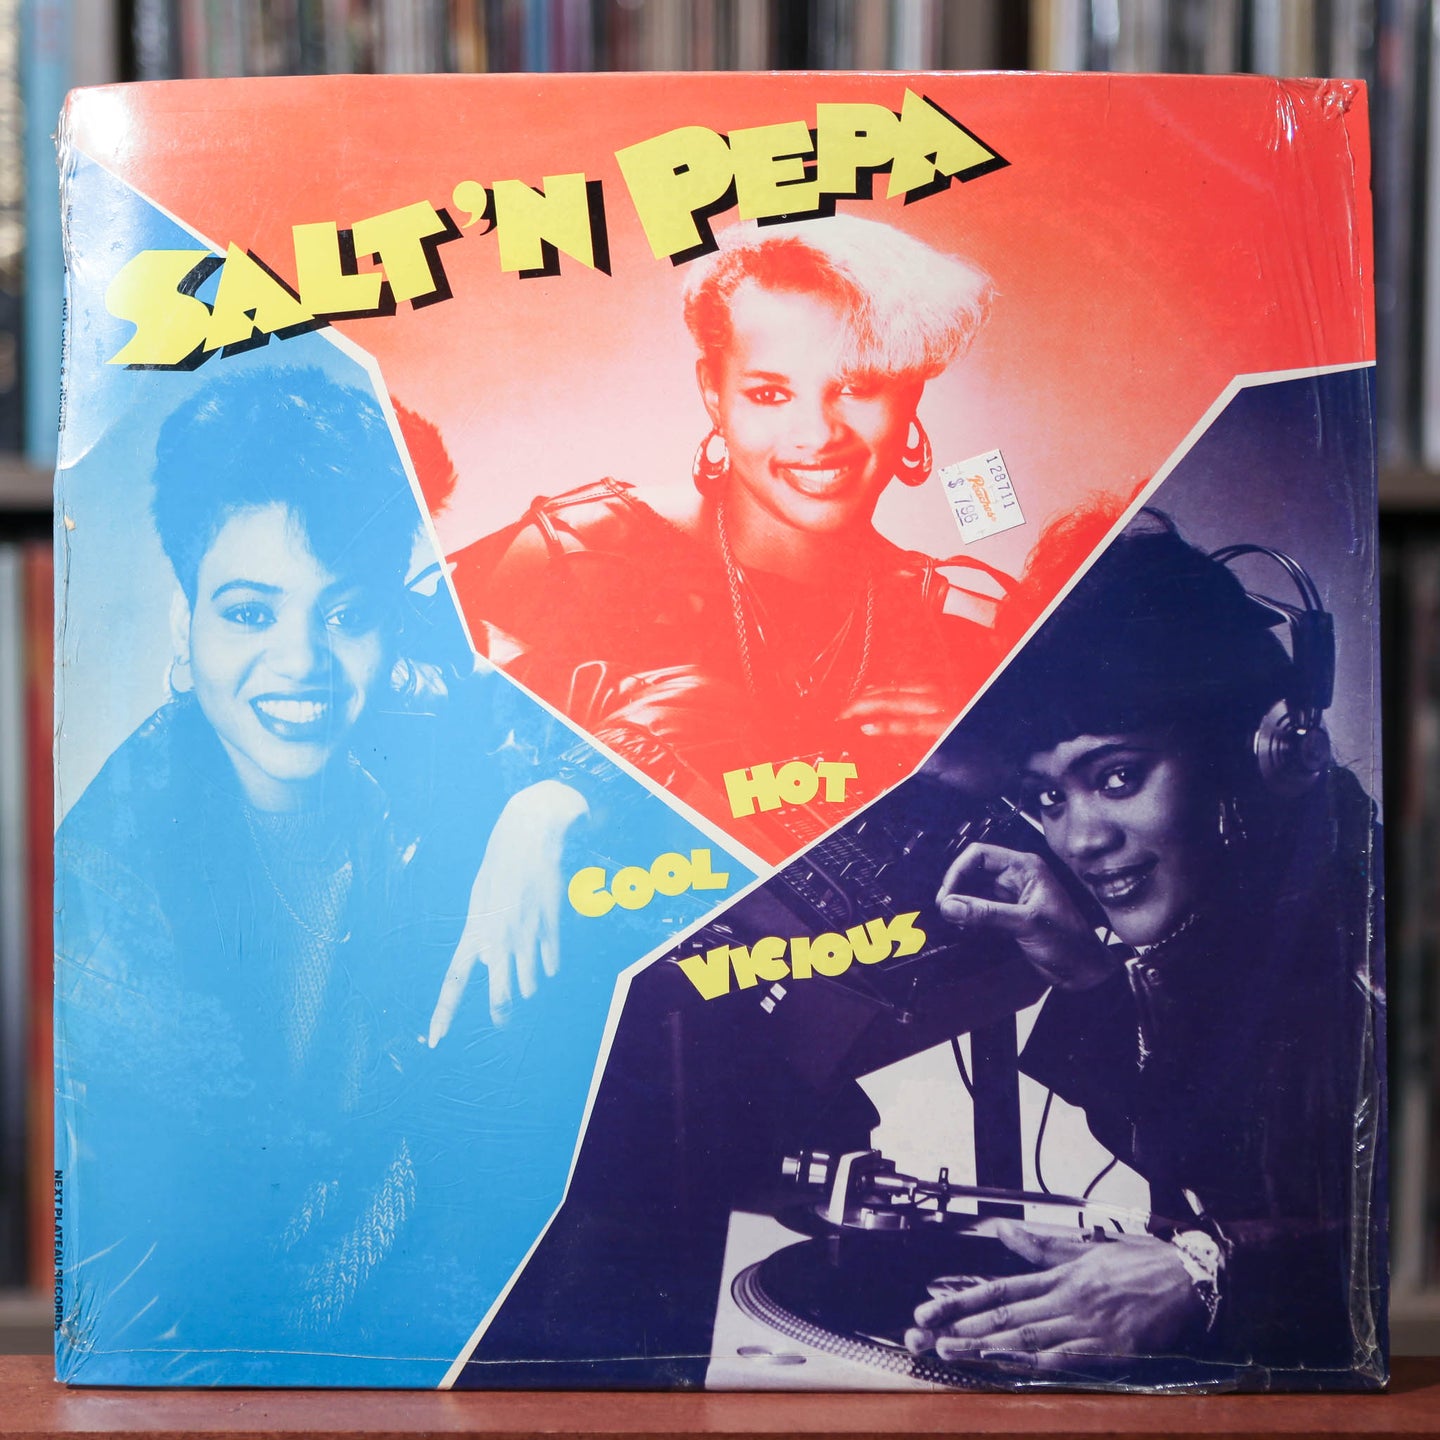 Salt 'N Pepa - Hot Cool Vicious - 1986 Next Plateau Records